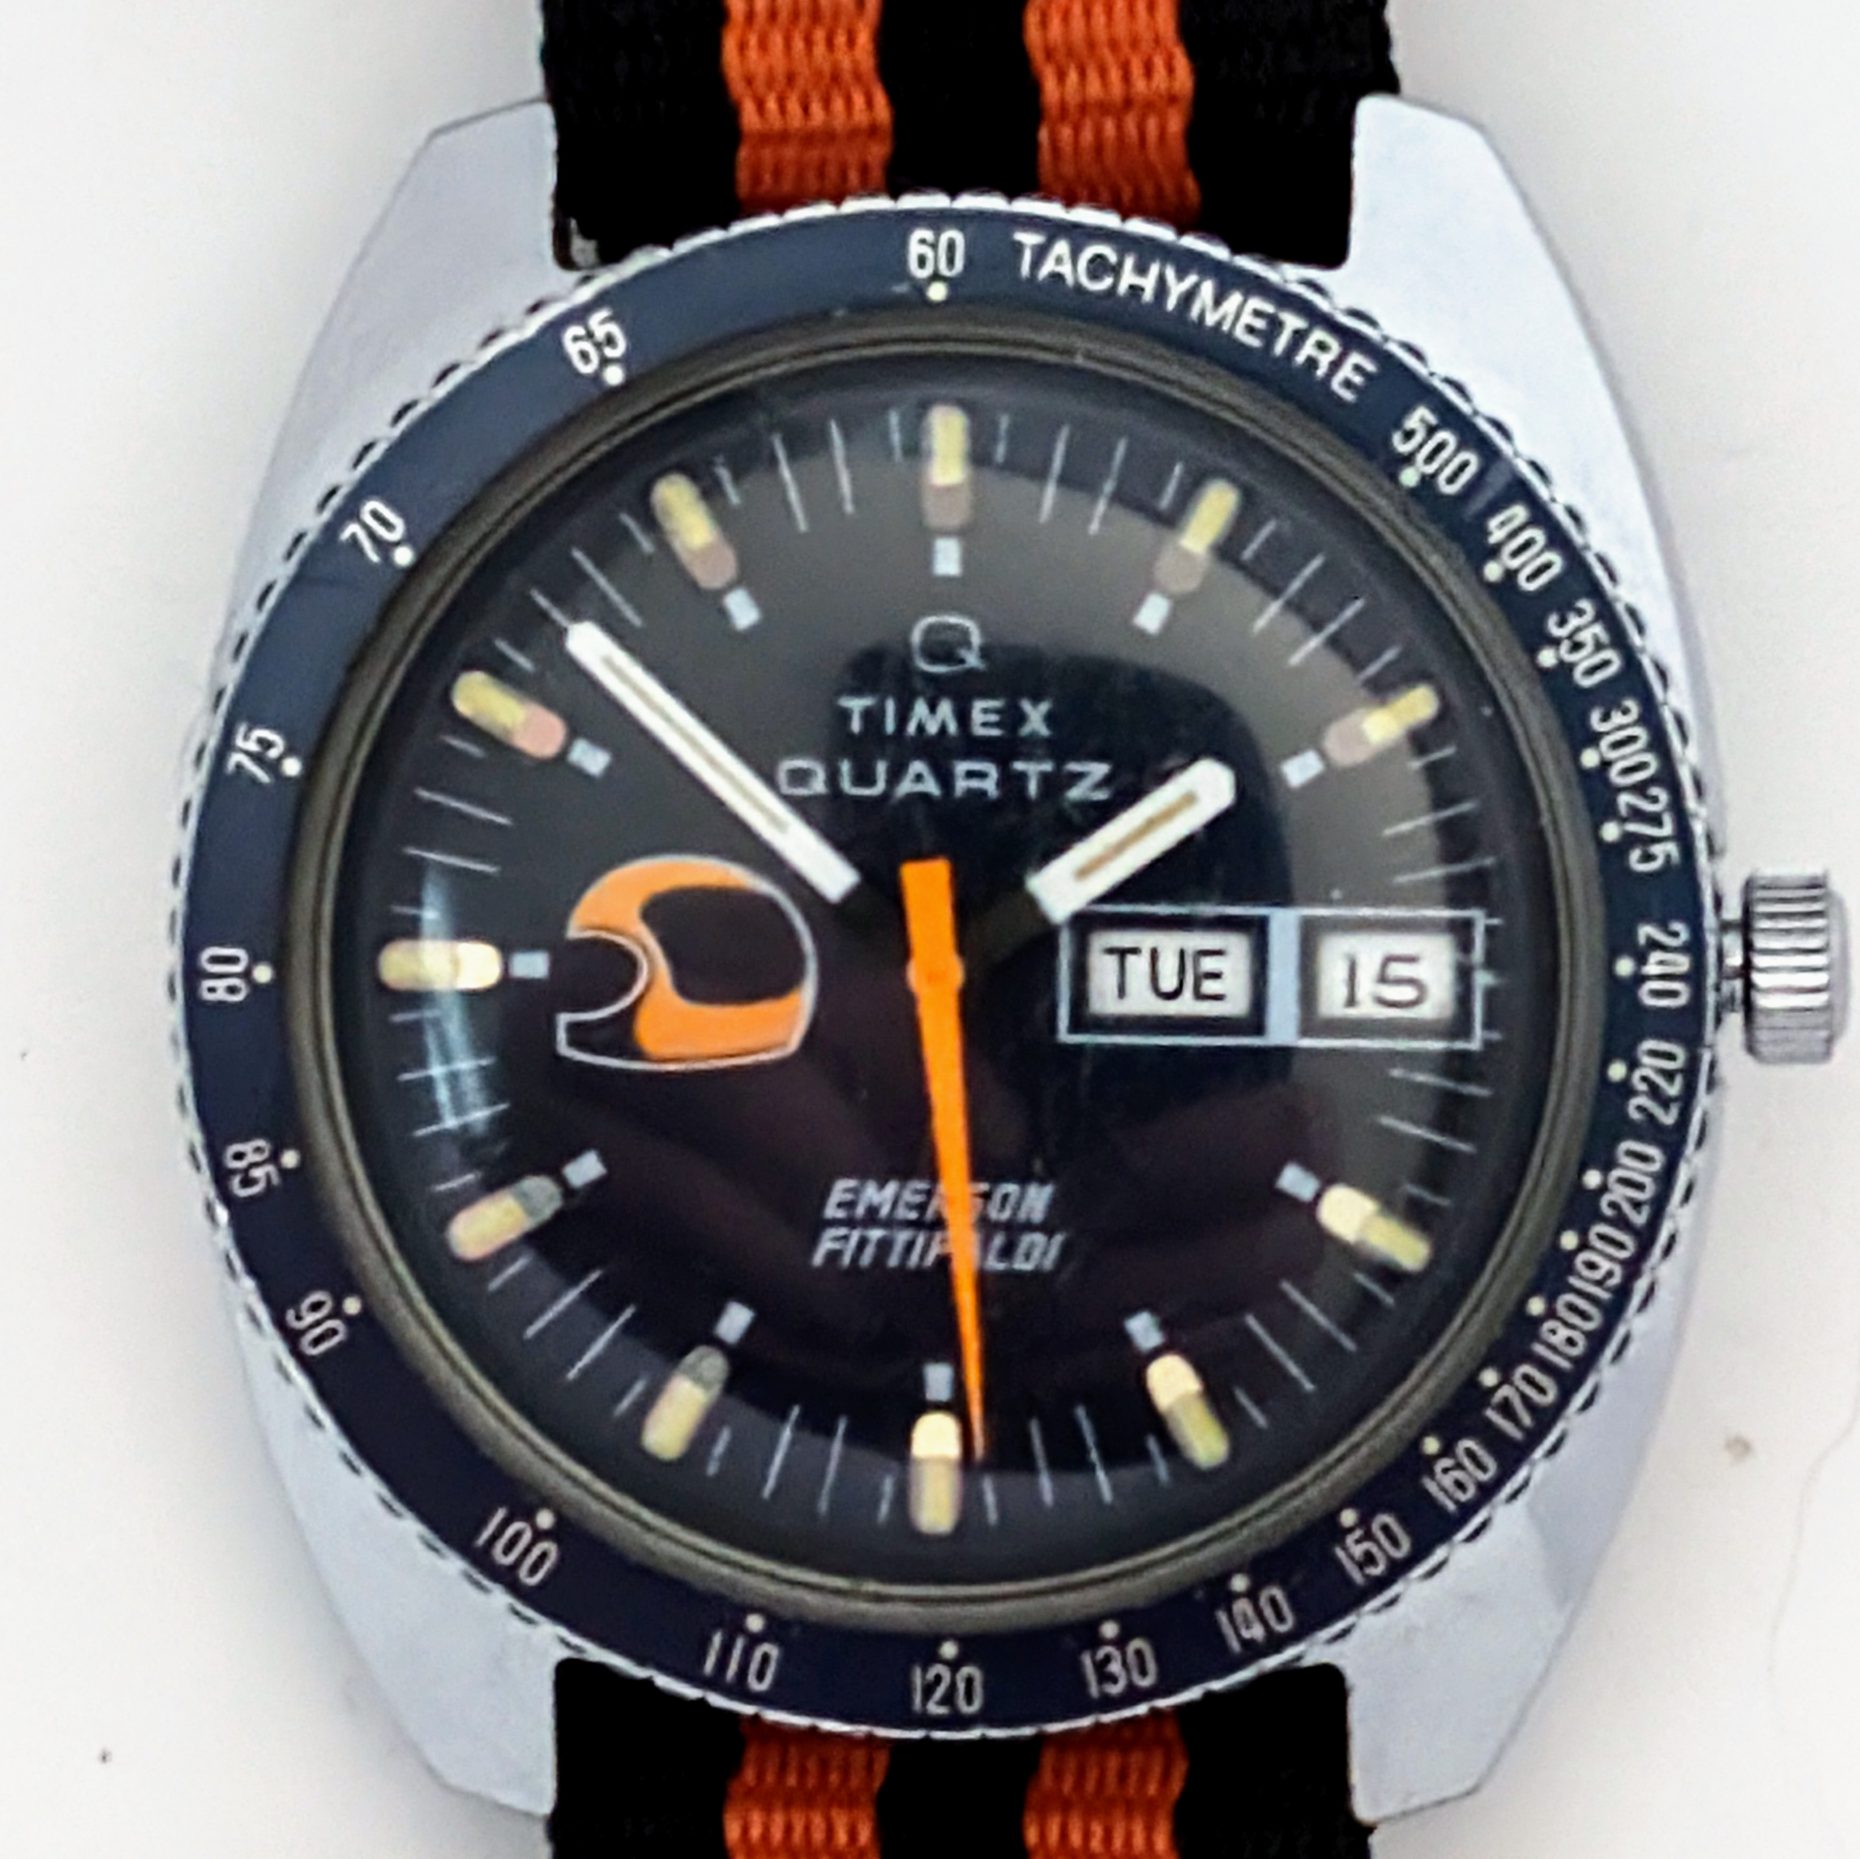 Timex Emerson Fittipaldi Q Quartz Watch 1975 Ref. 39311 26375